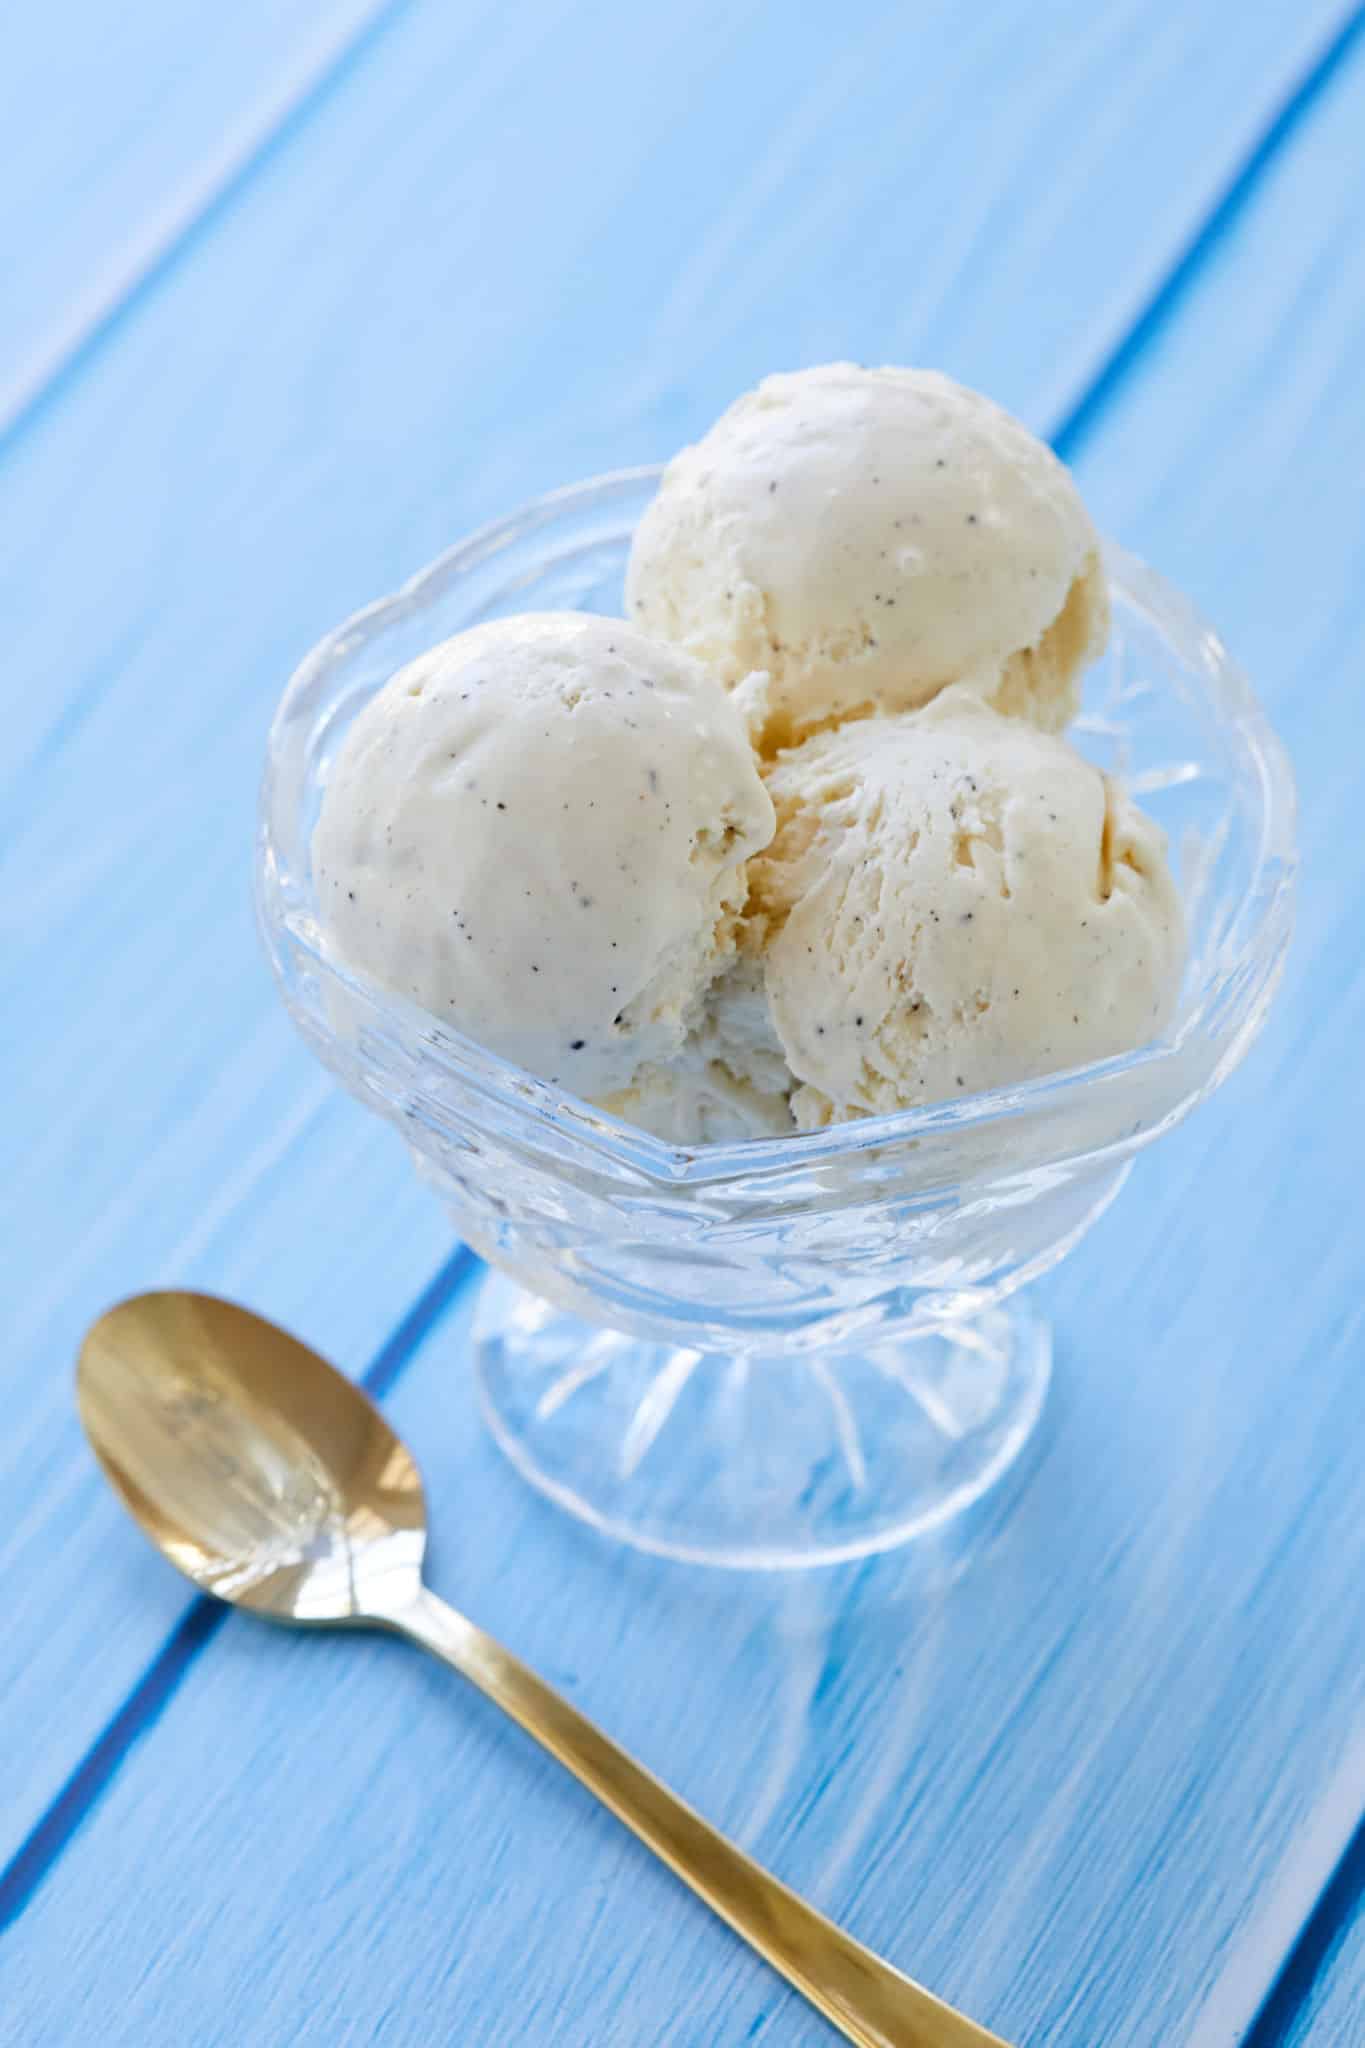 https://www.biggerbolderbaking.com/wp-content/uploads/2018/05/Vanilla-2-Ingredient-Ice-cream2-scaled.jpg